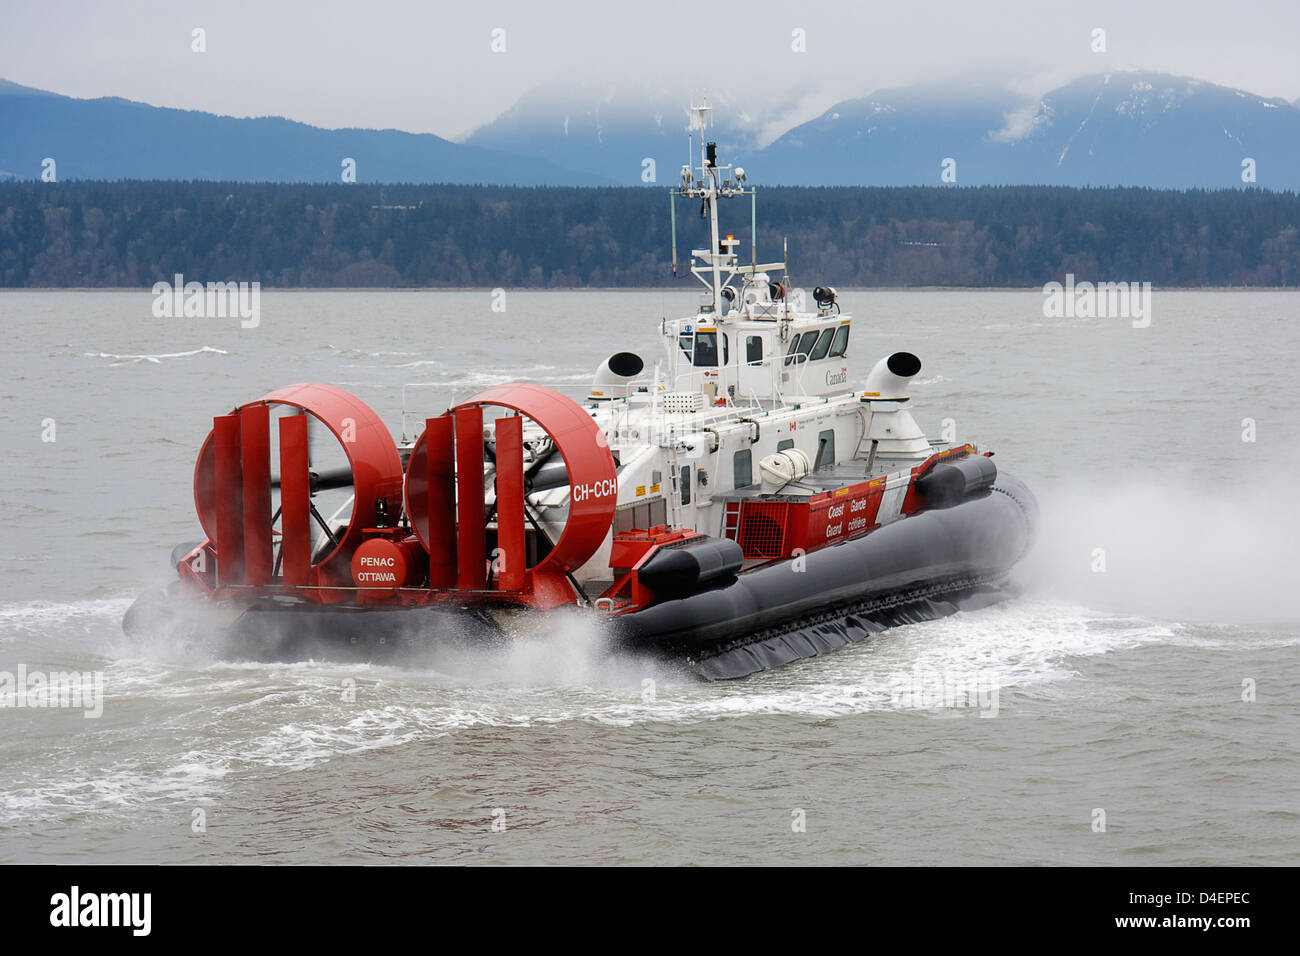 Canadian Coast Guard hover craft Penac, Stock Photo